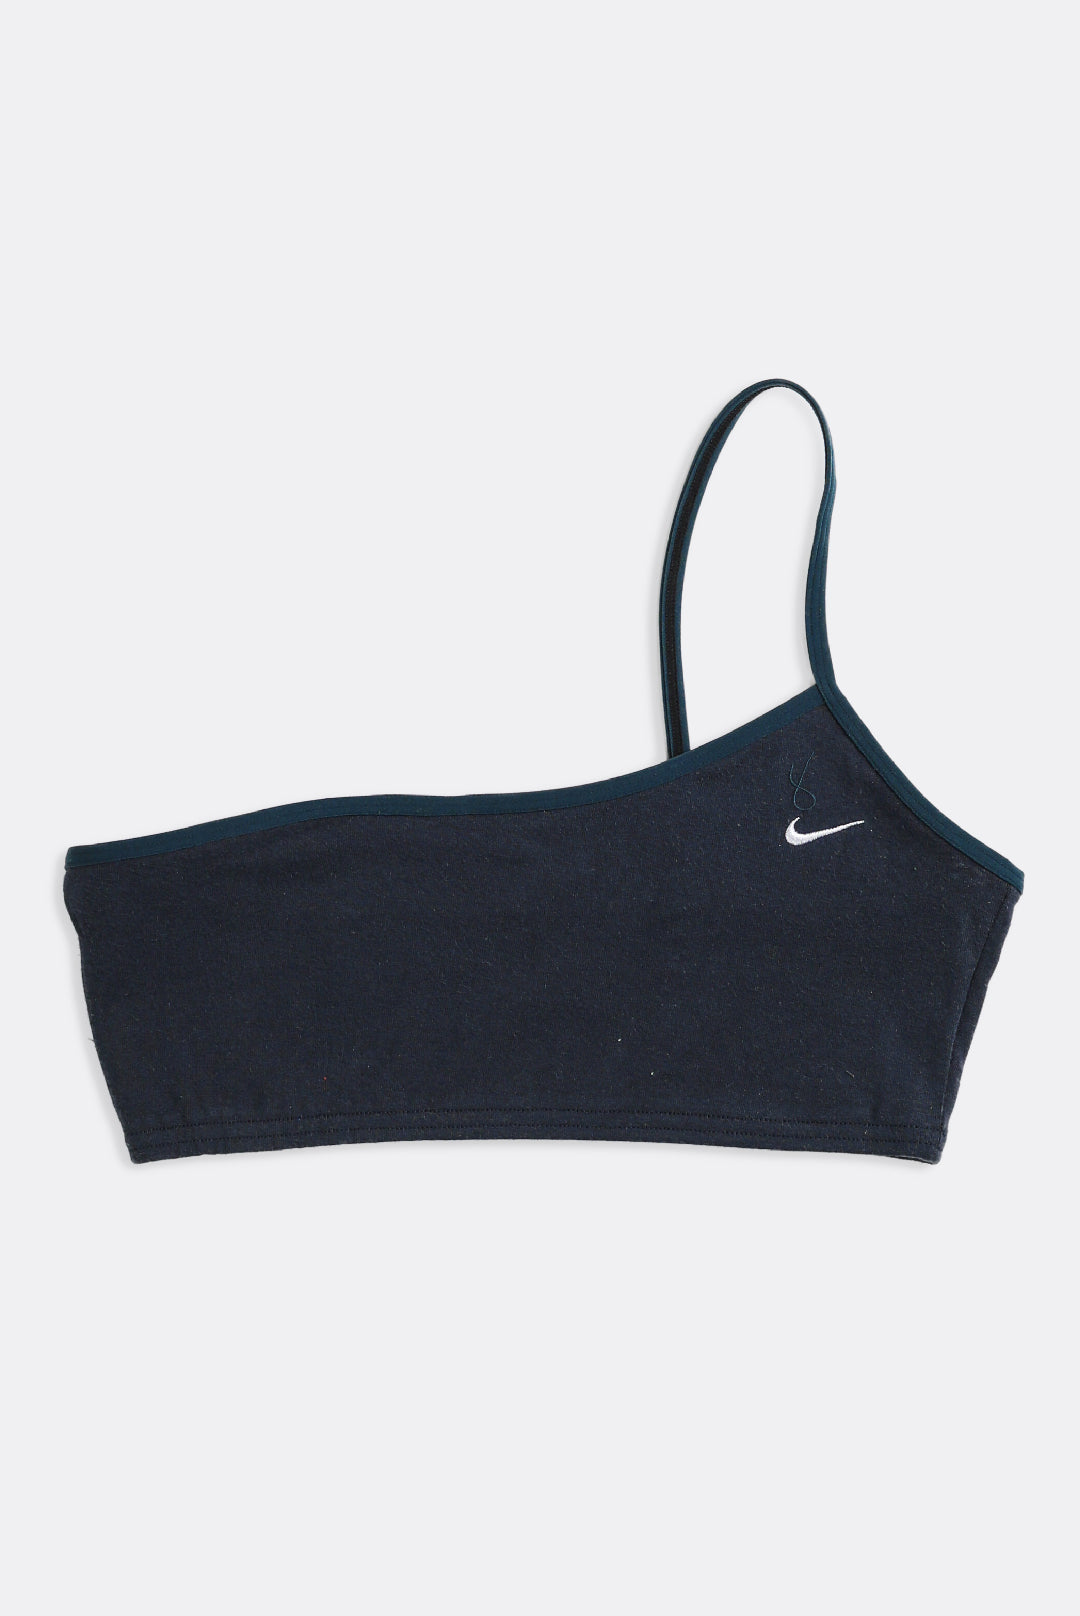 Rework Nike One Shoulder Bra Top - XS, S, M, L, XL – Frankie